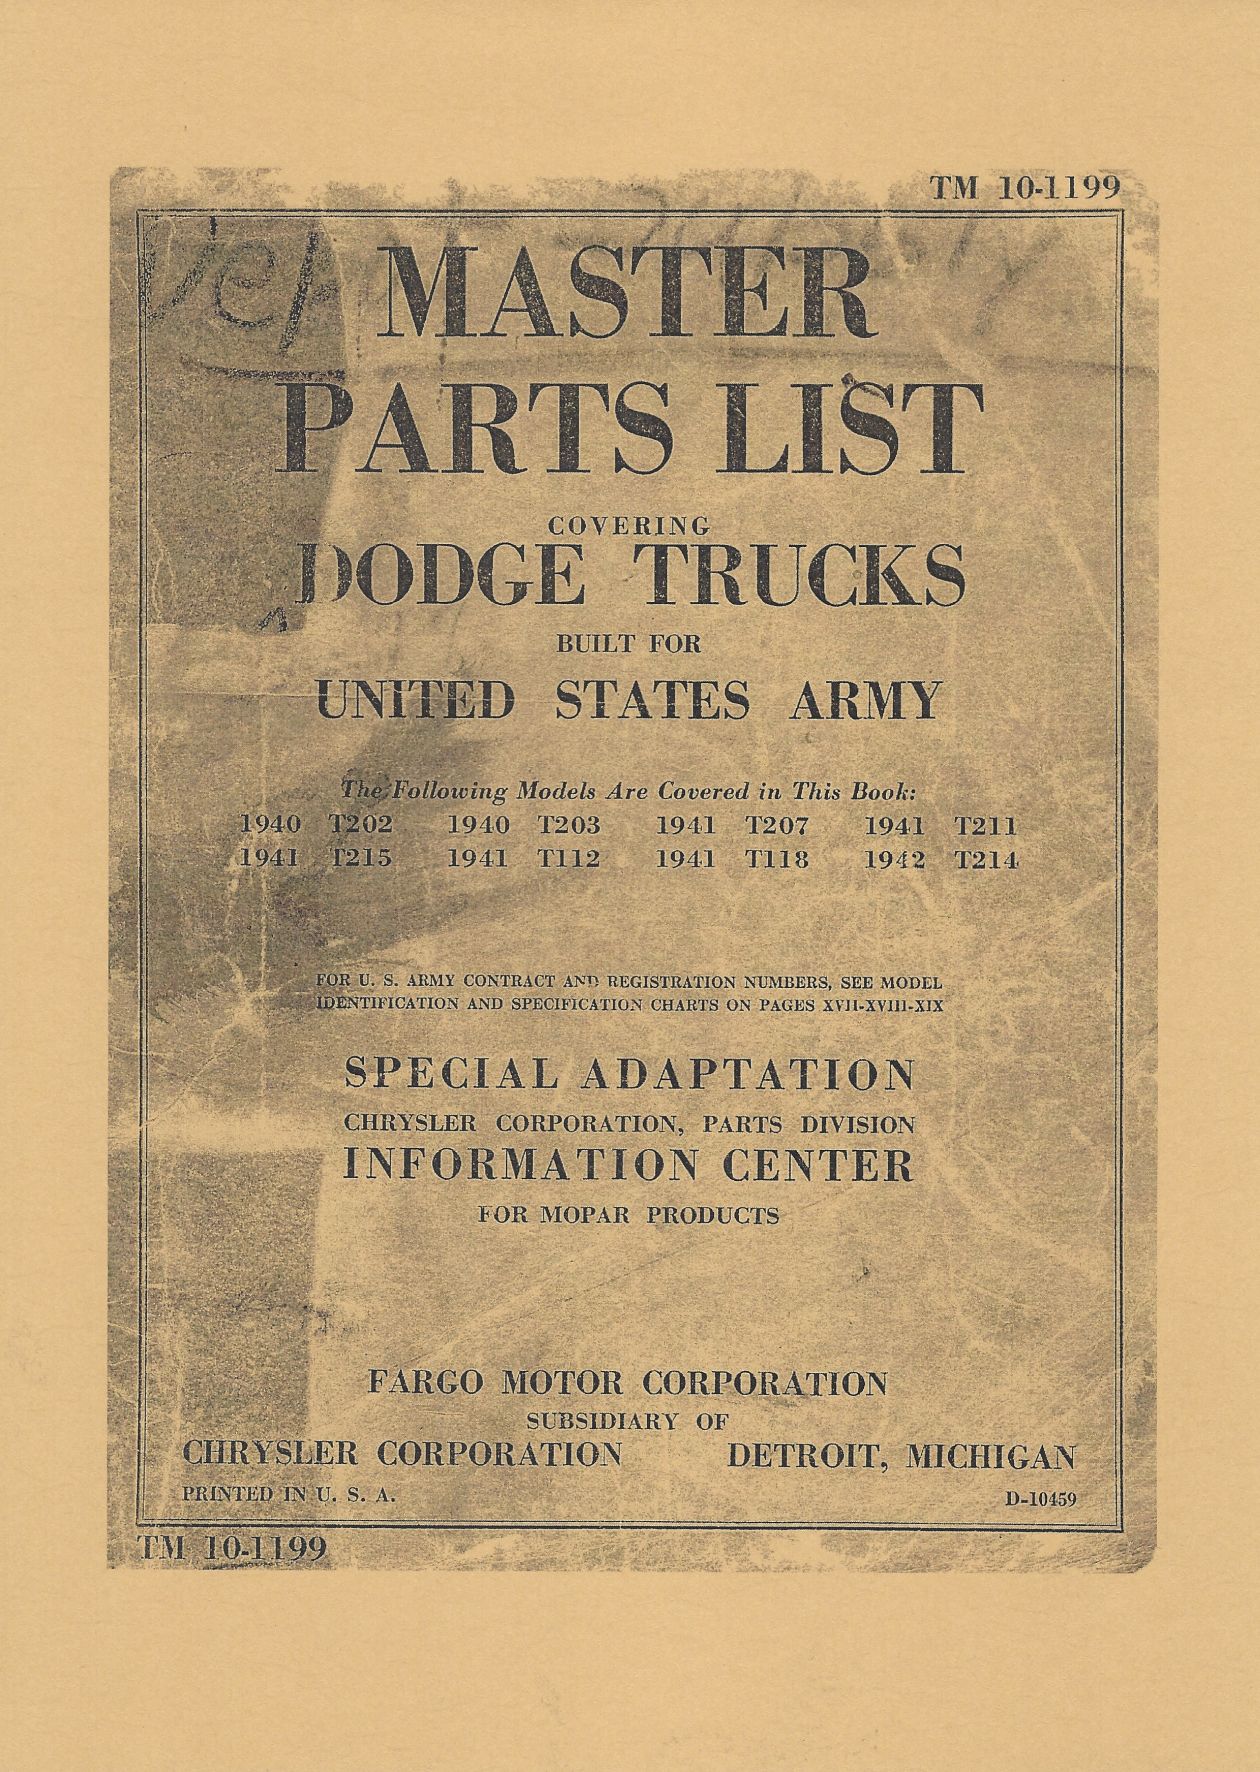 TM 10-1199 US DODGE MASTER PARTS LIST 1942